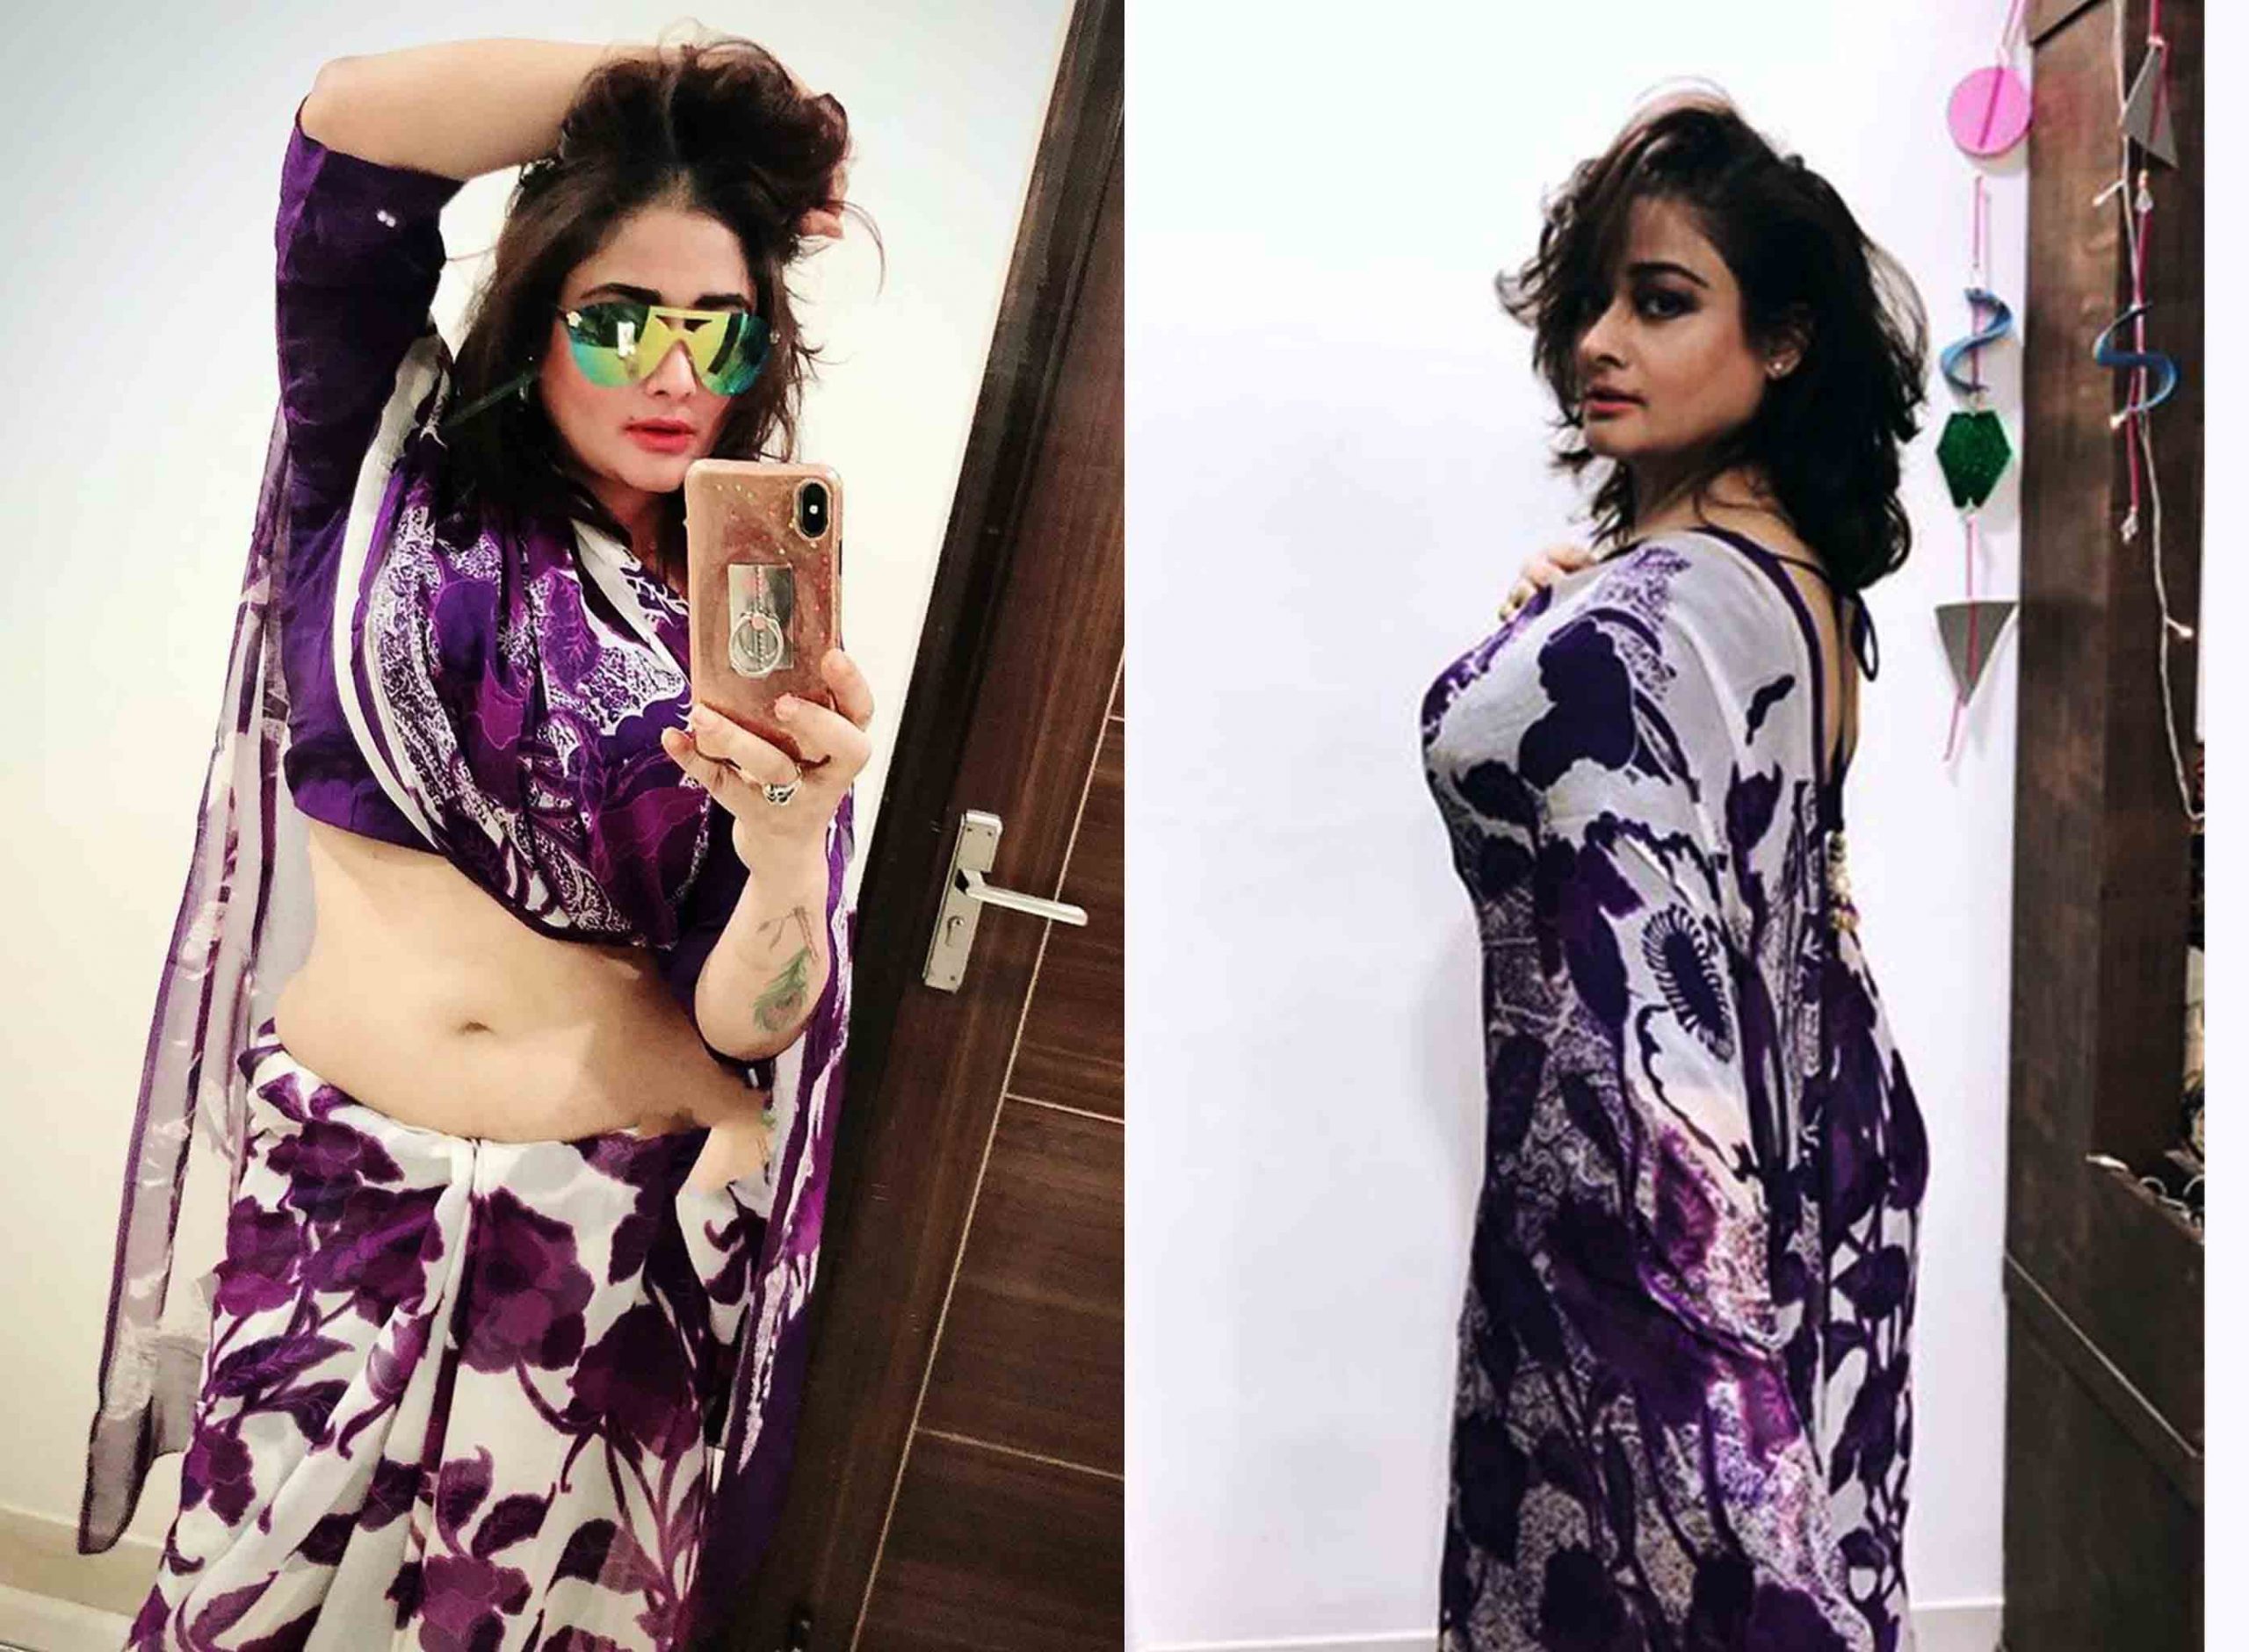 Stunning Selfies of Kiran Rathod in Saree